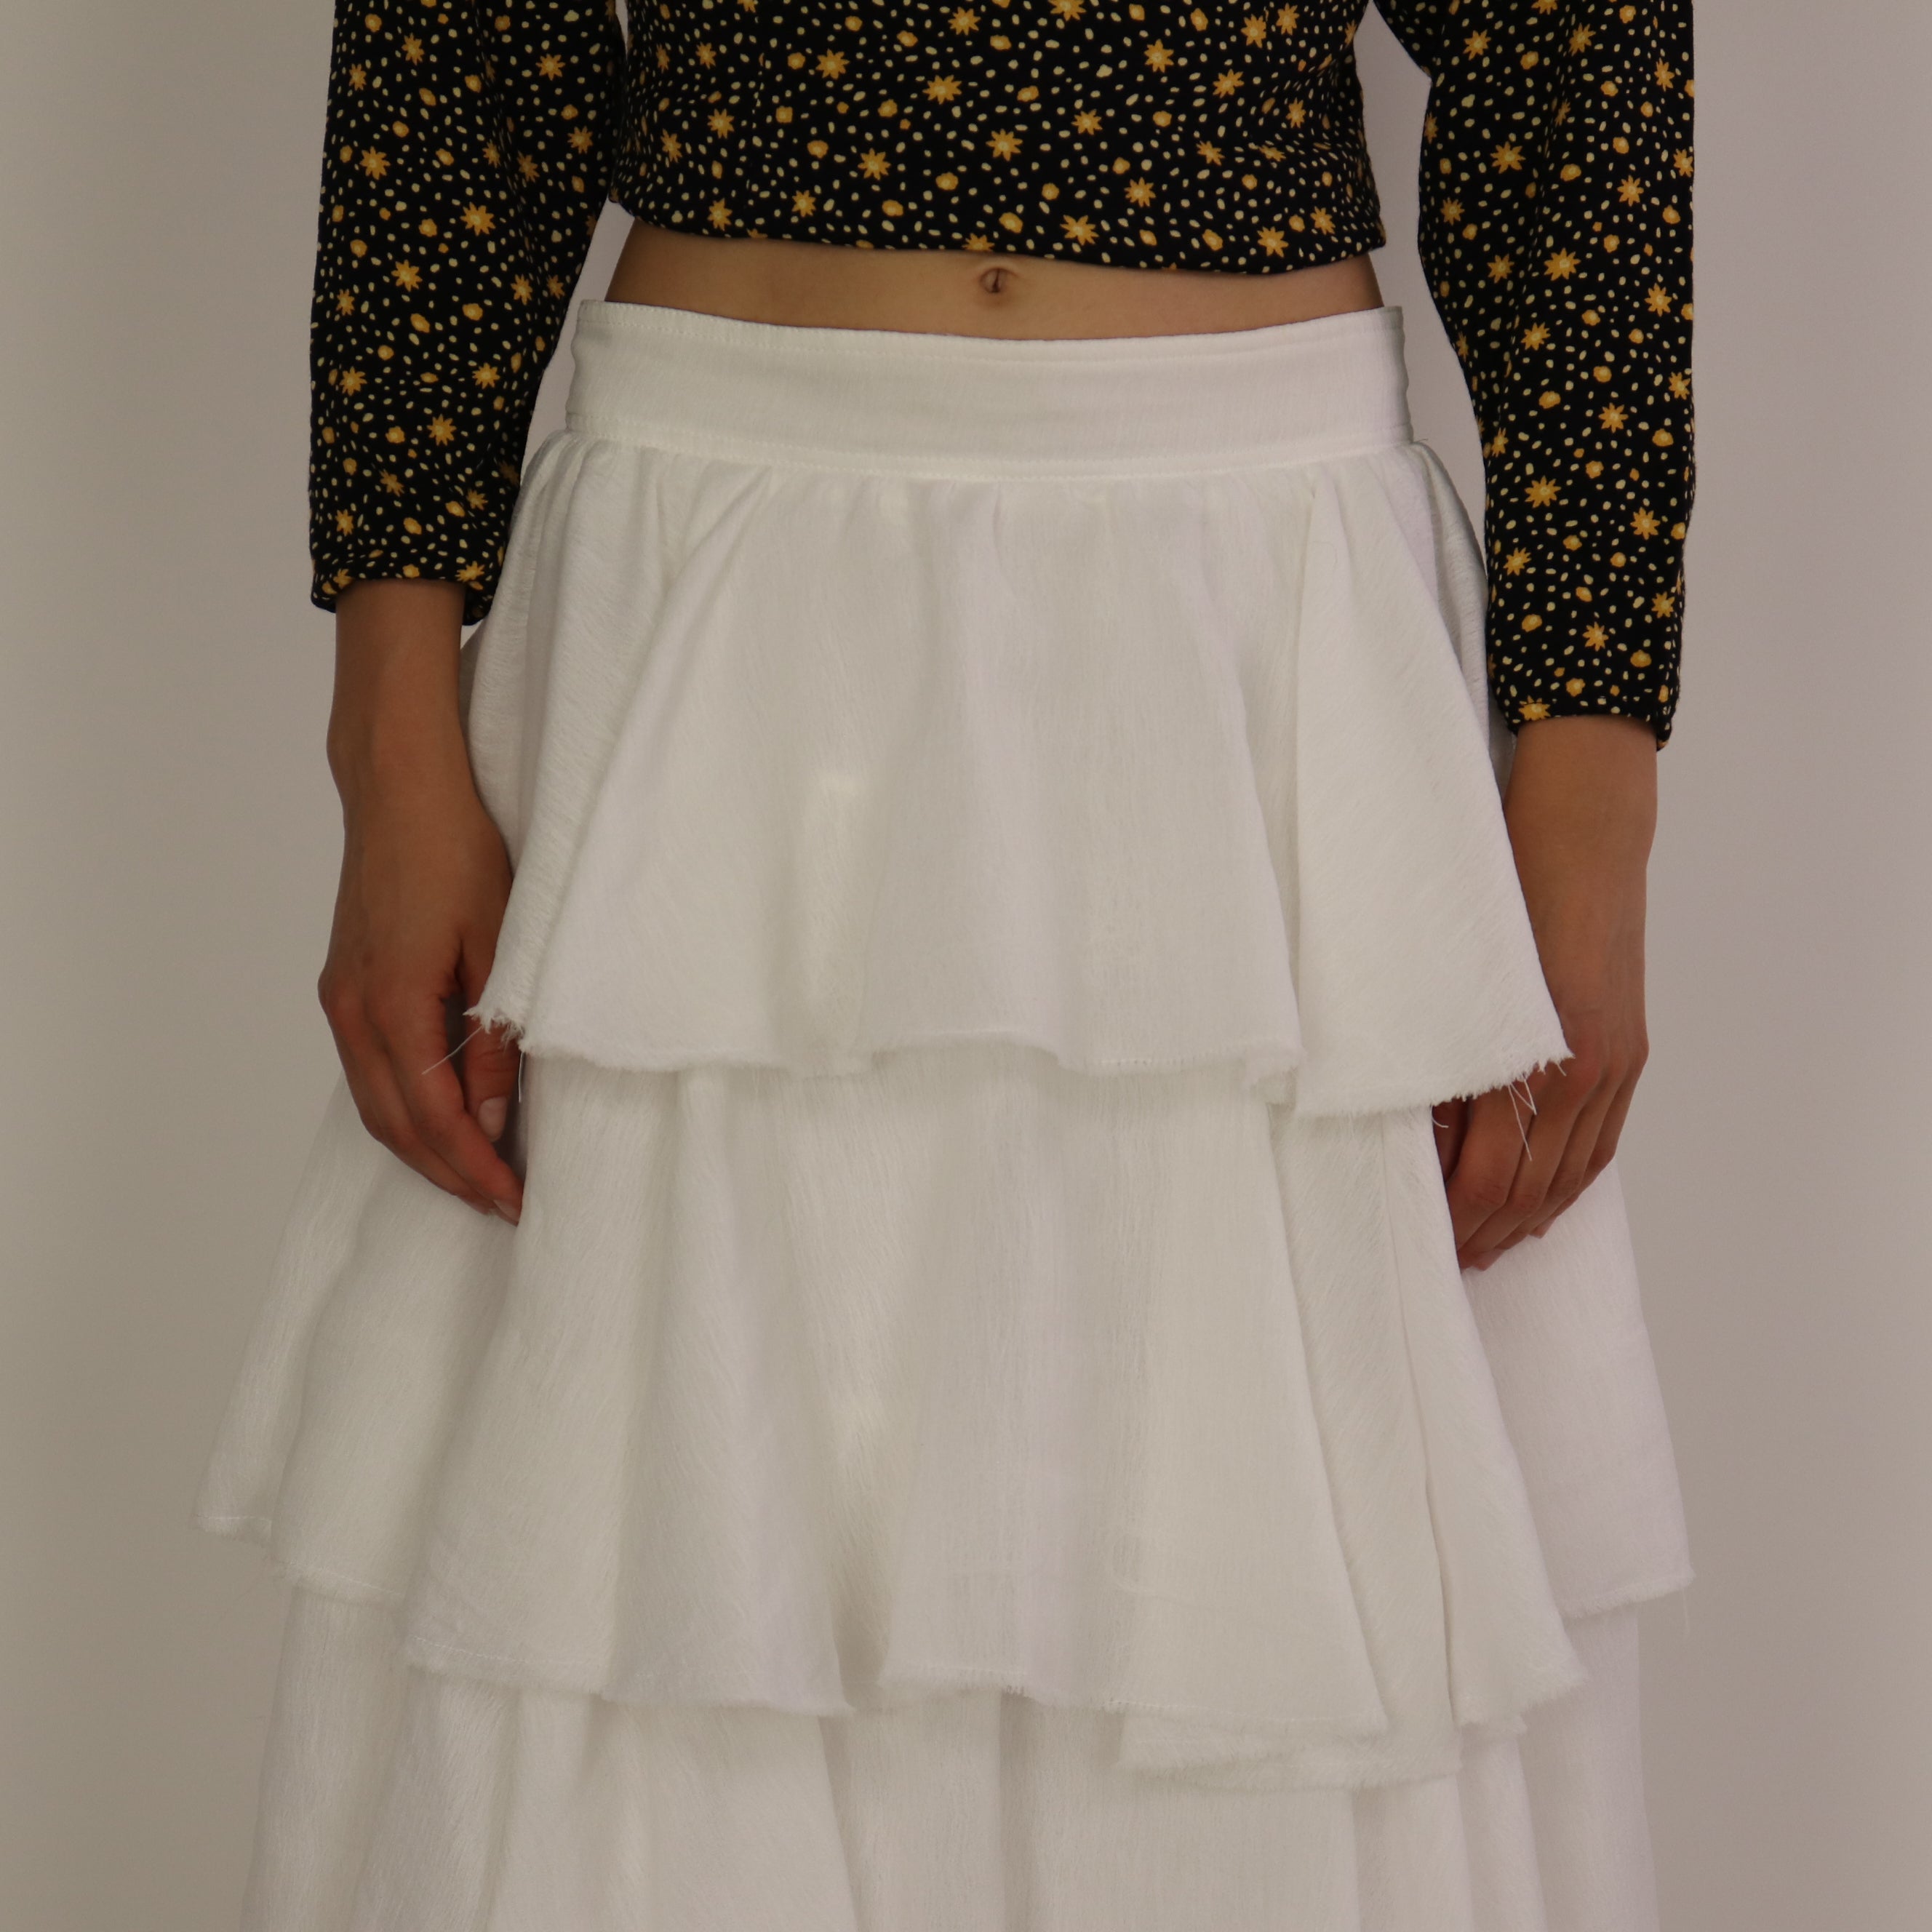 Skirt, Size 12